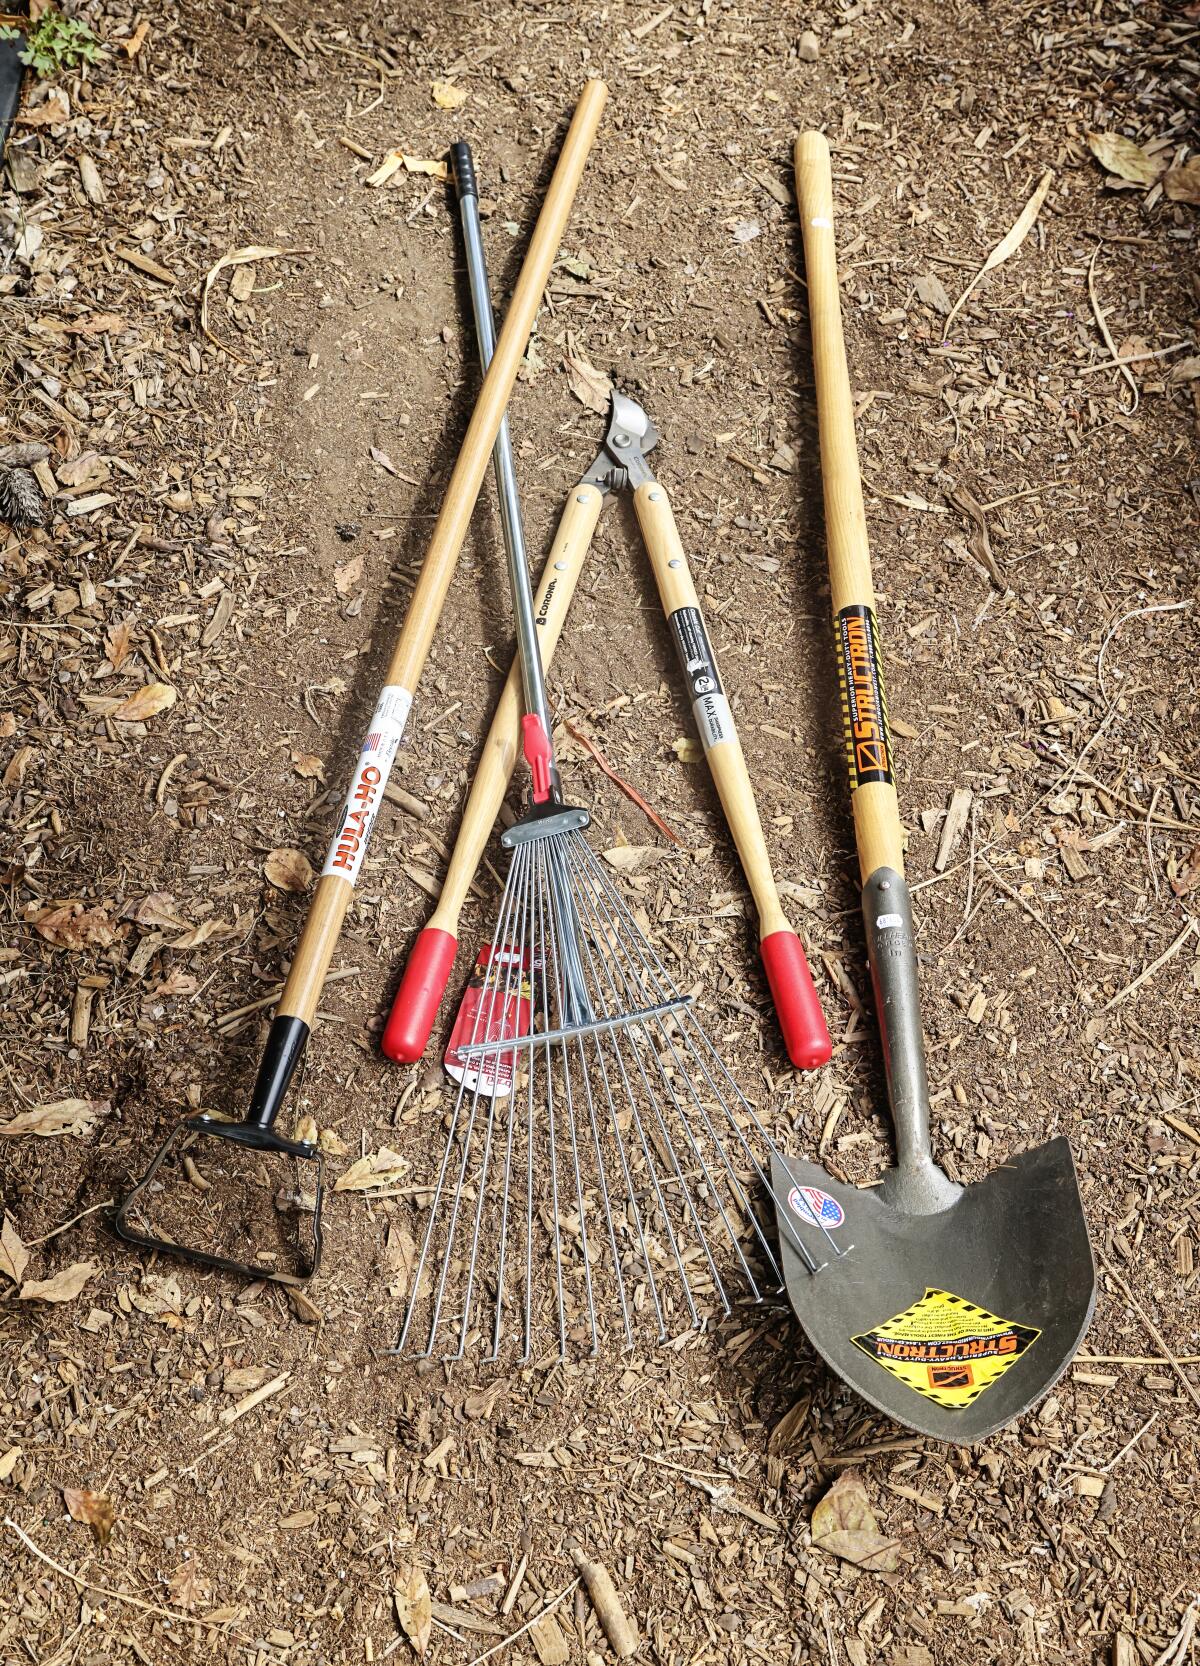 A hula hoe, adjustable steel rake, bypass lopper pruner and shovel.